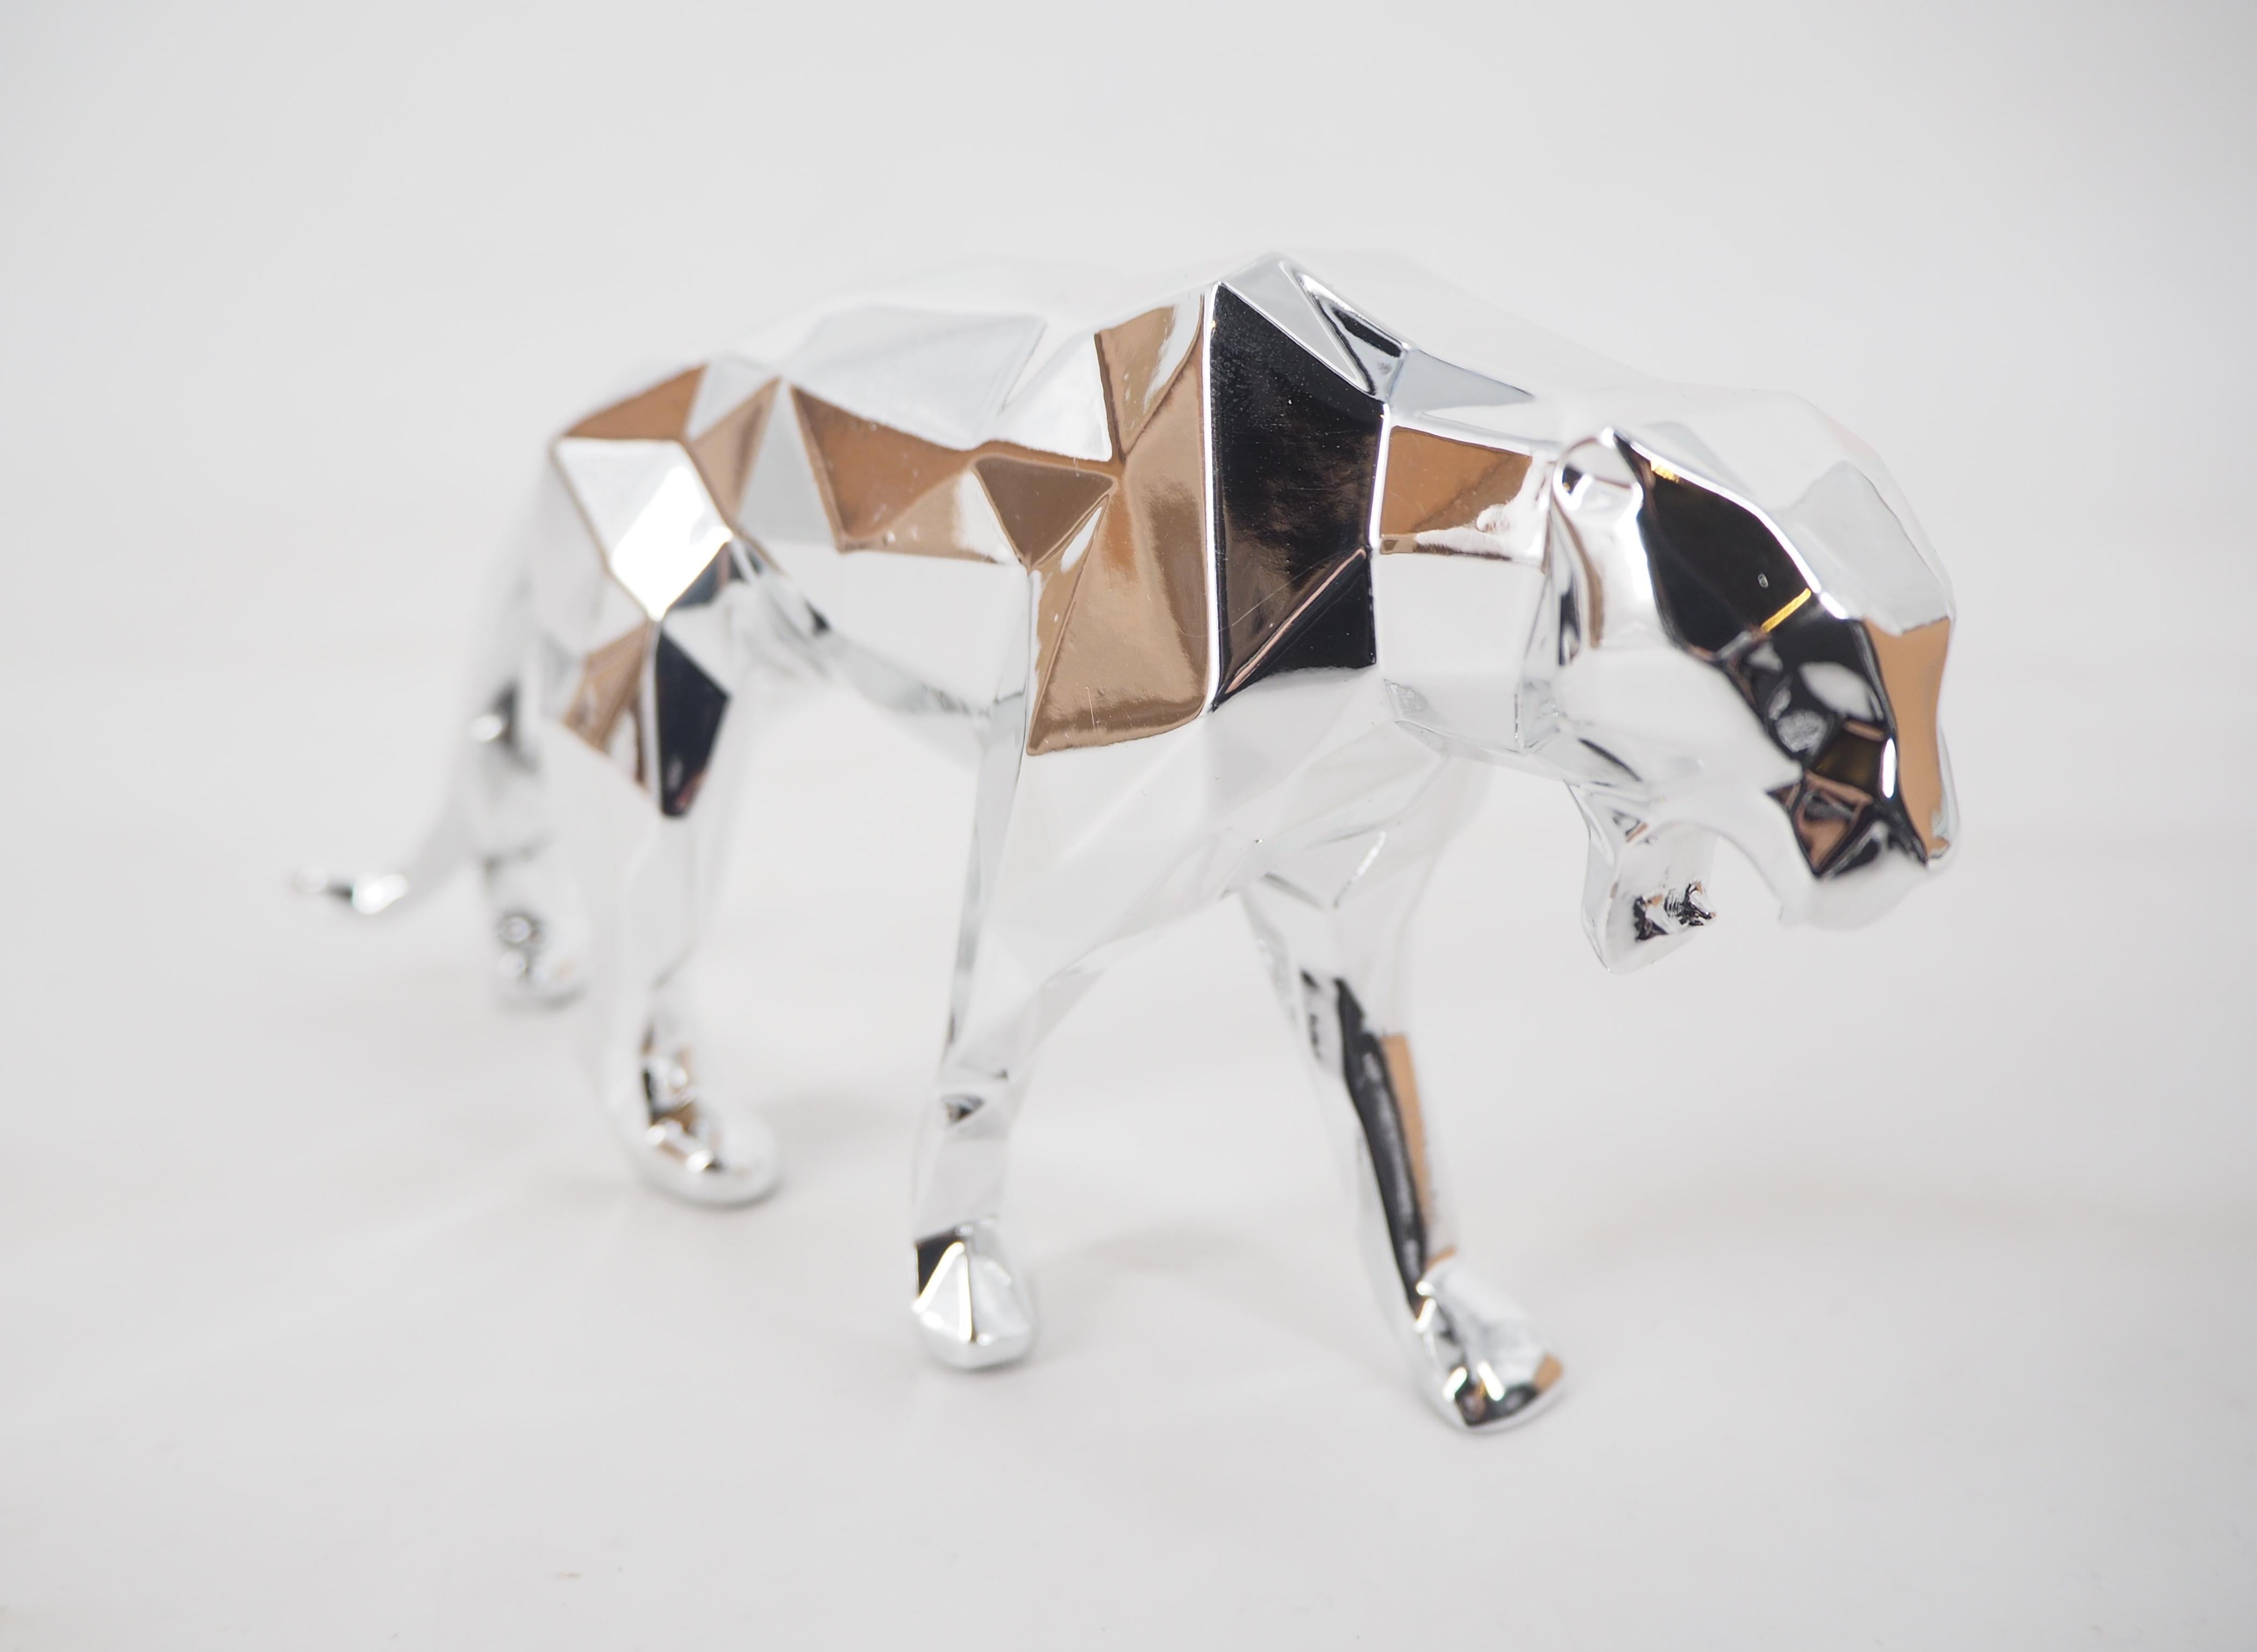 Panther Spirit (Silver edition) - Sculpture 2